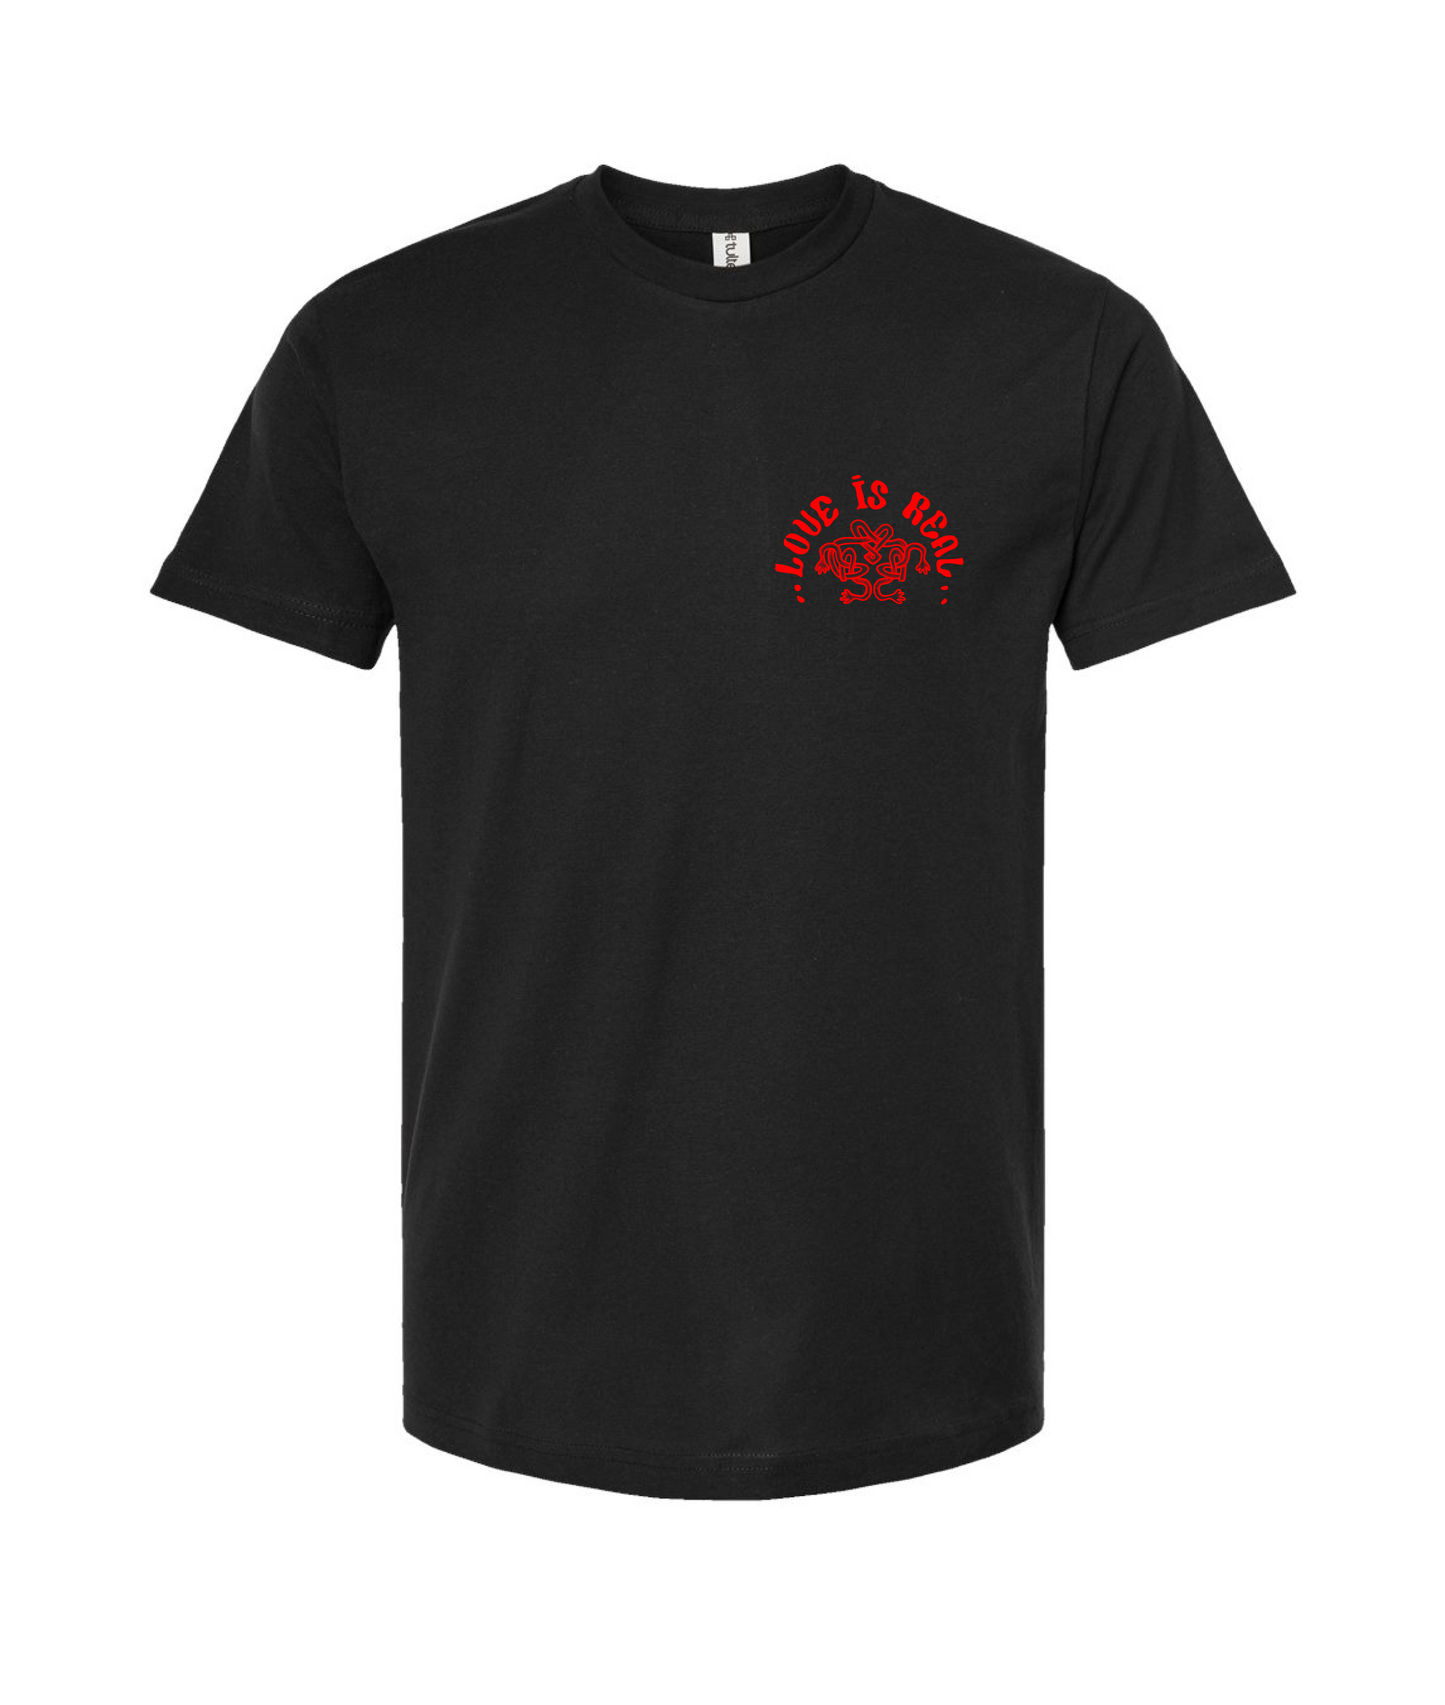 LOVE IS REAL - Logo - Black T-Shirt